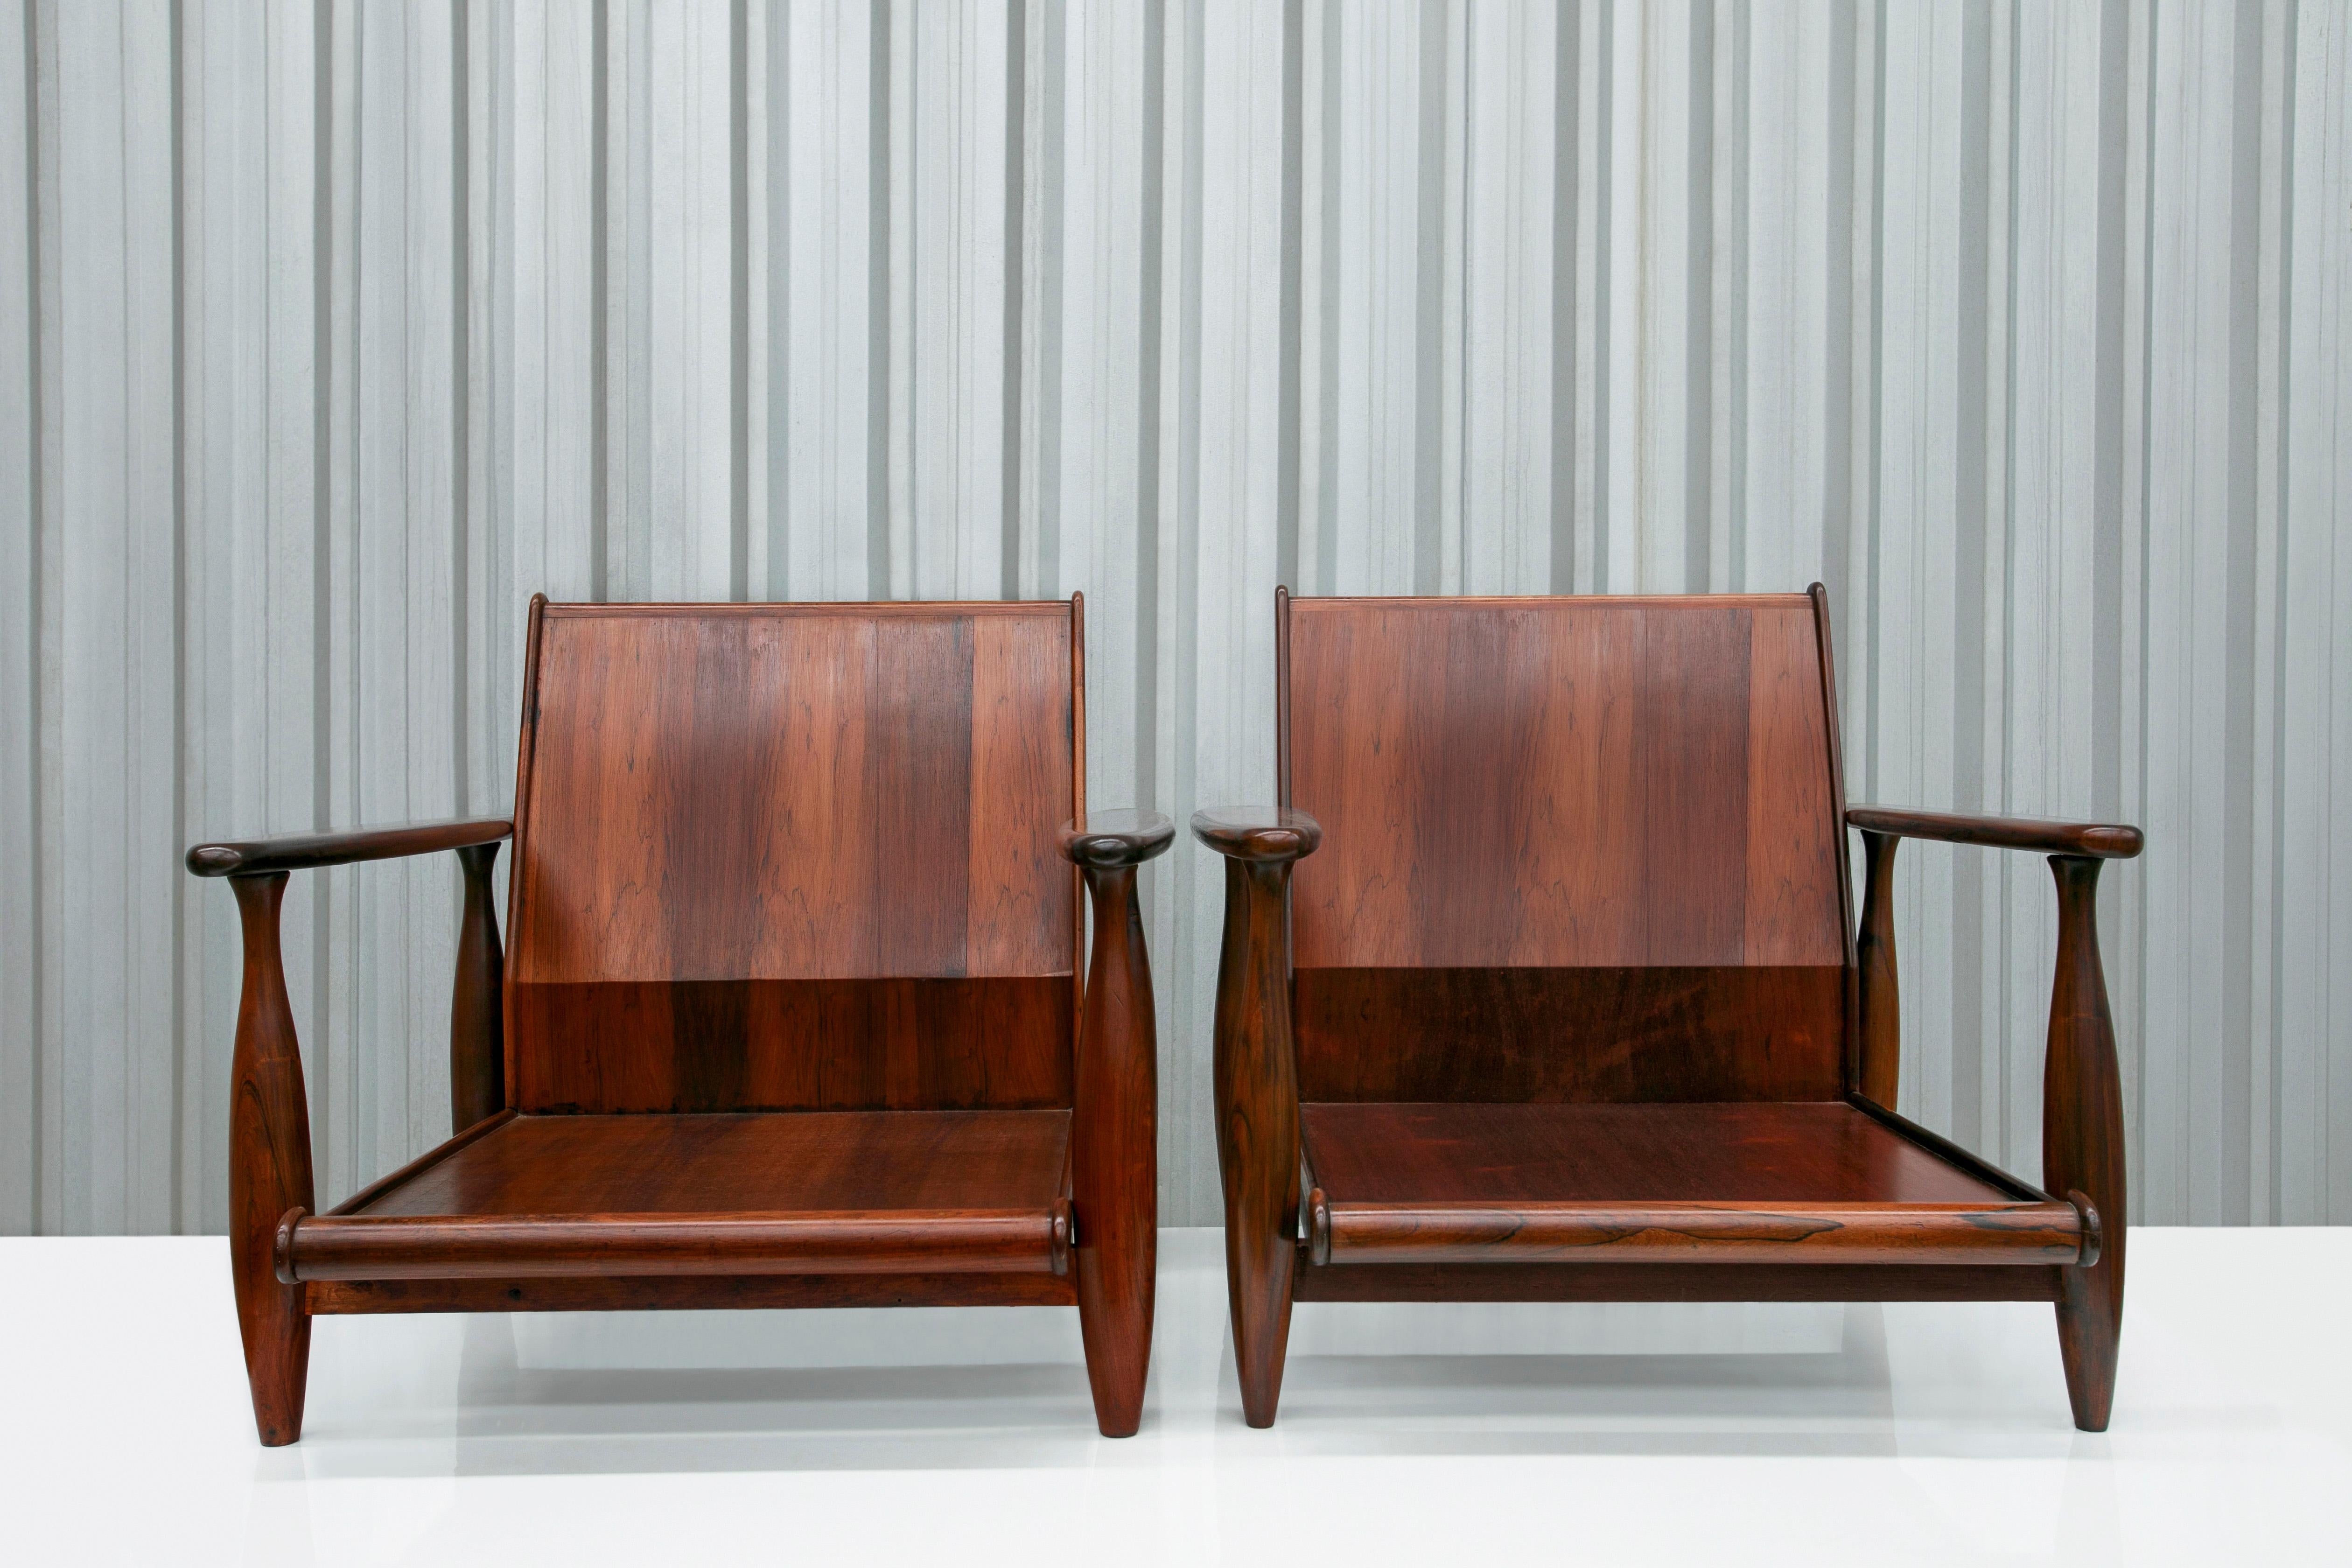 Hand-Carved Brazilian Modern Armchairs in Hardwood & Beige Linen by Liceu De Artes, 1960s For Sale